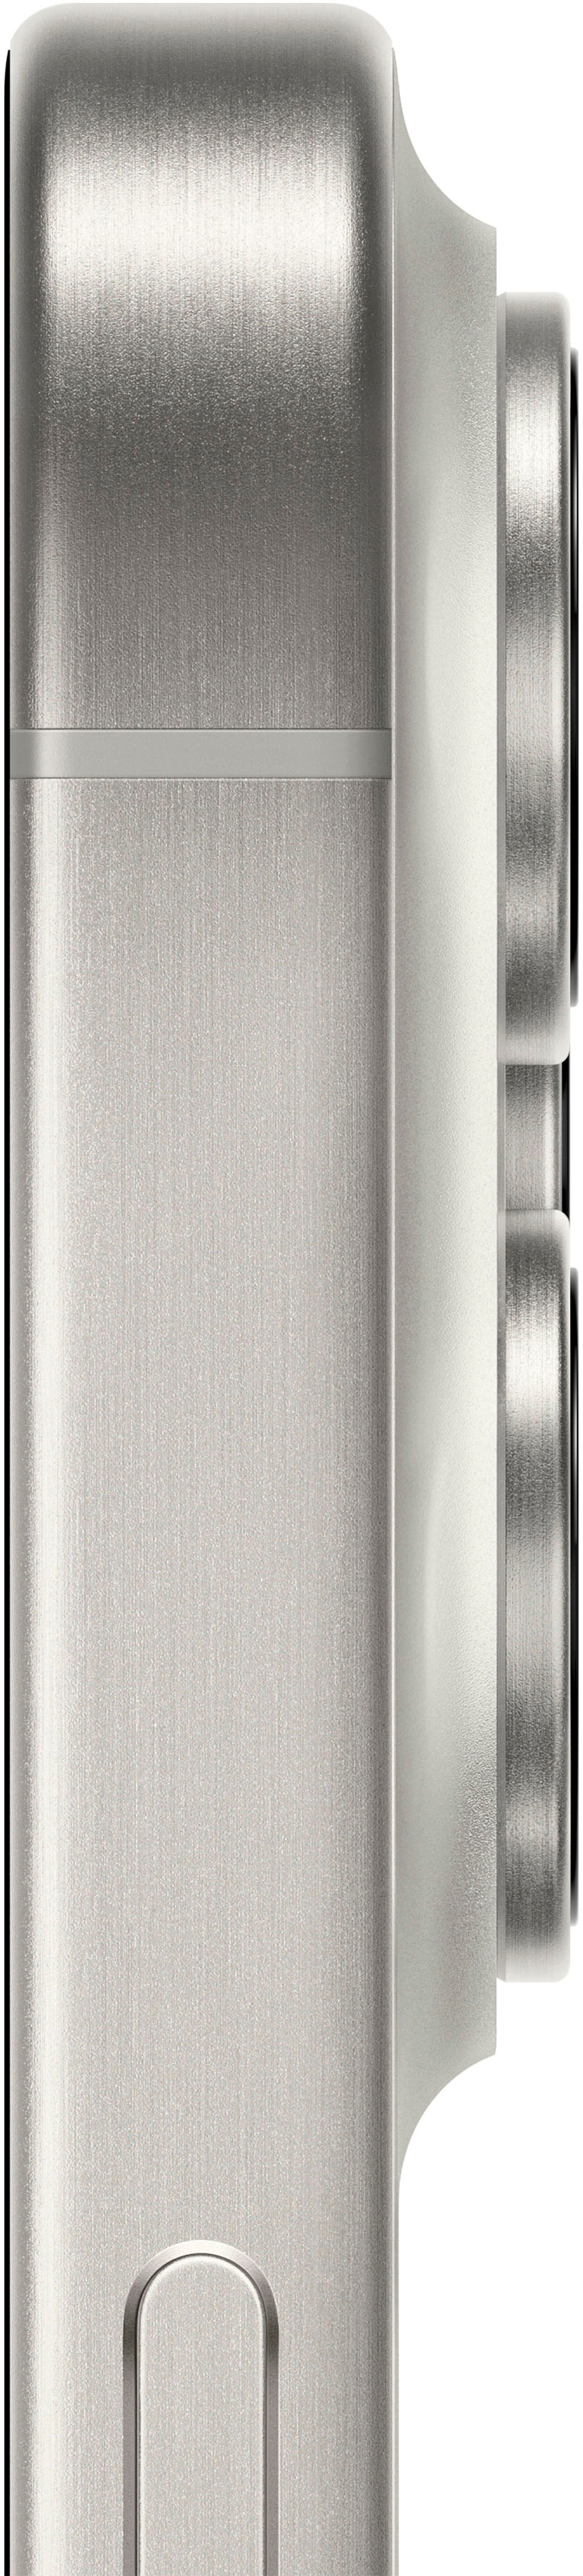 Apple iPhone 15 Pro Max 512GB White Titanium (AT&T) MU6C3LL/A - Best Buy